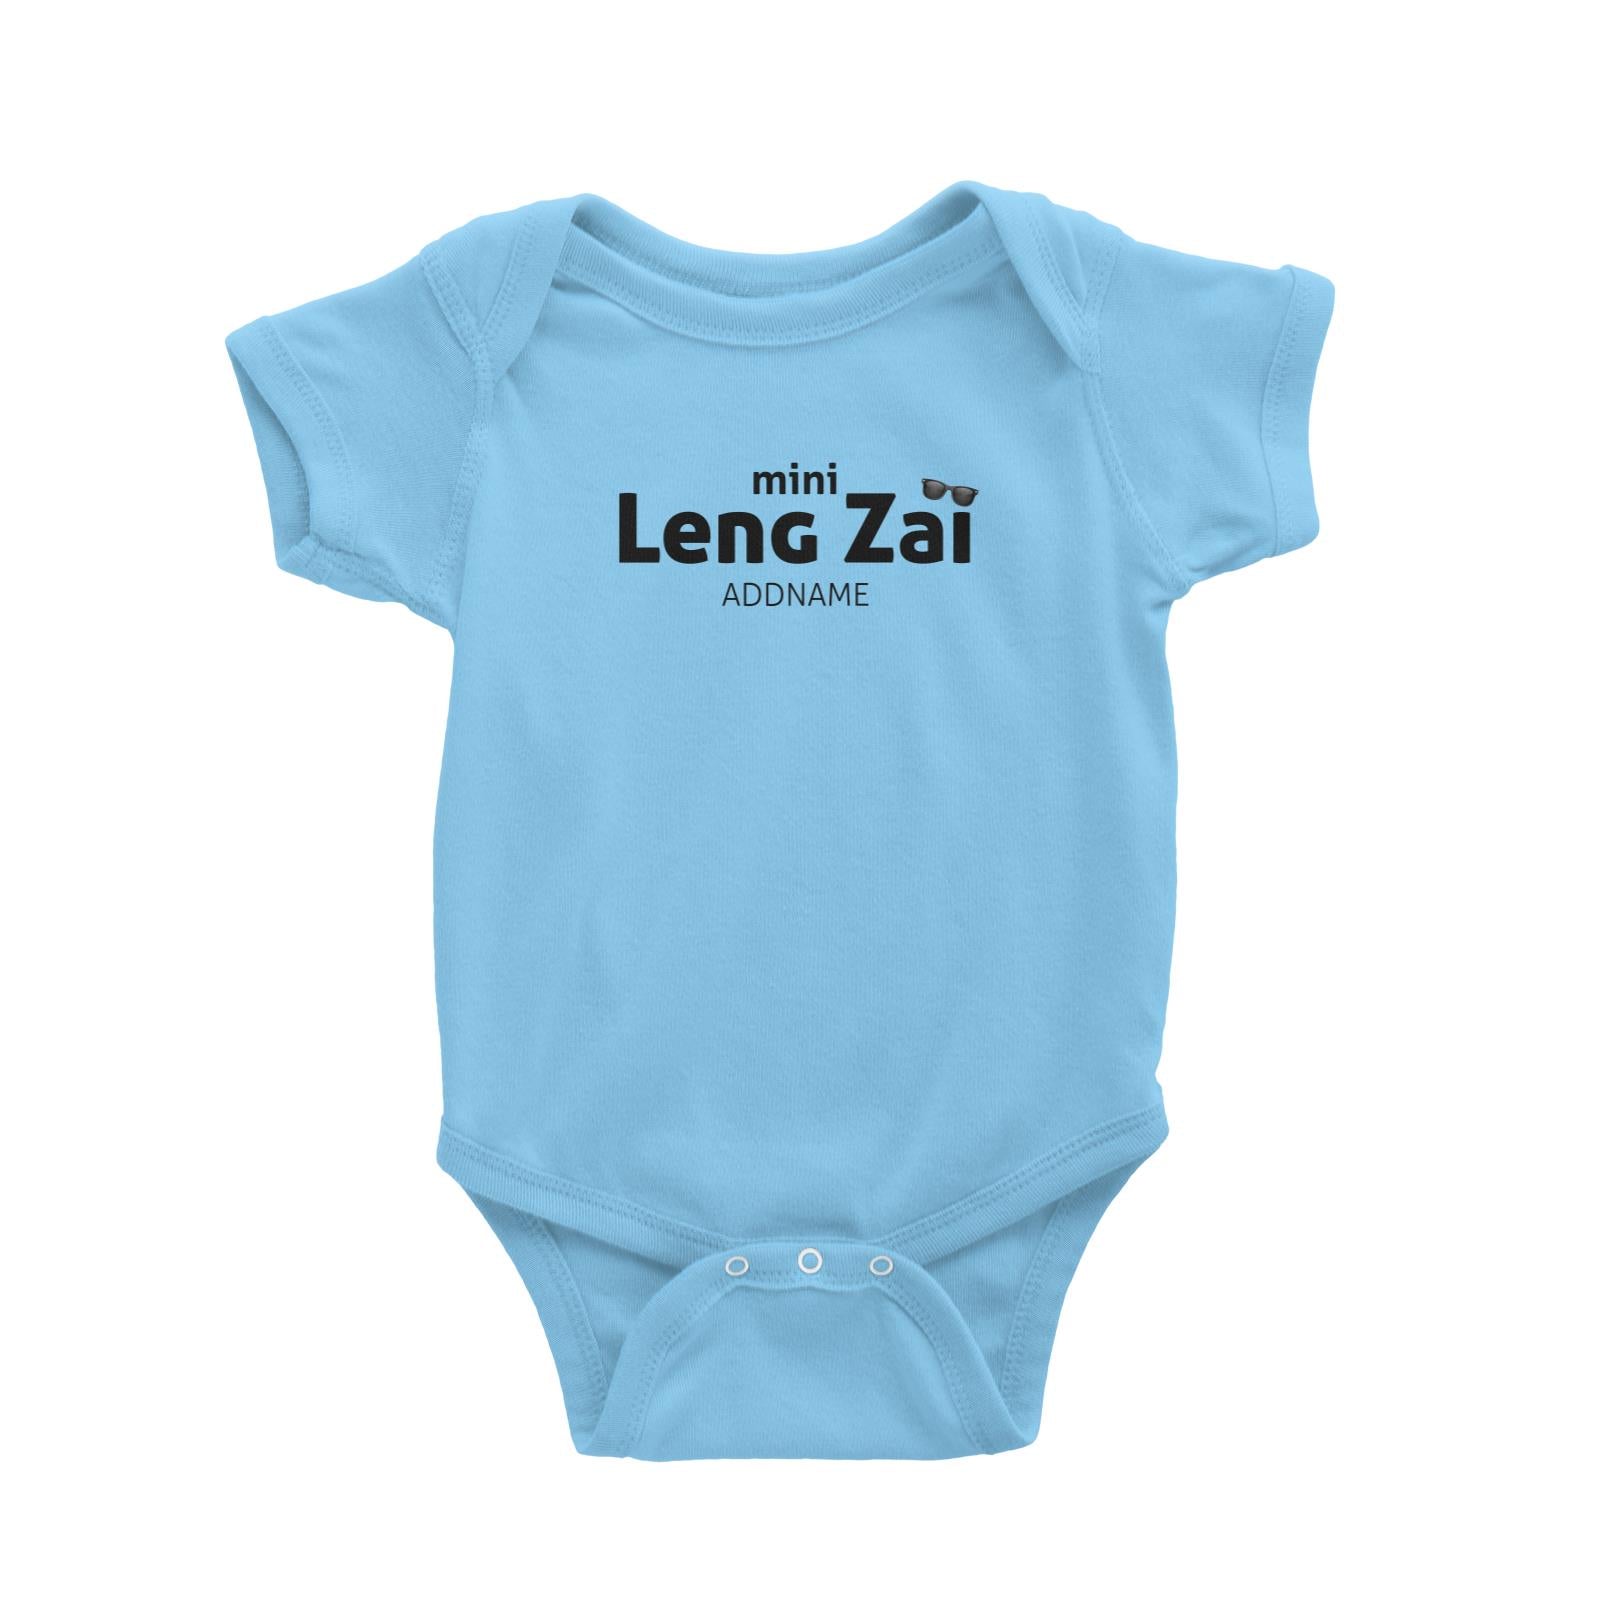 Mini Leng Zai with Sunnies Baby Romper